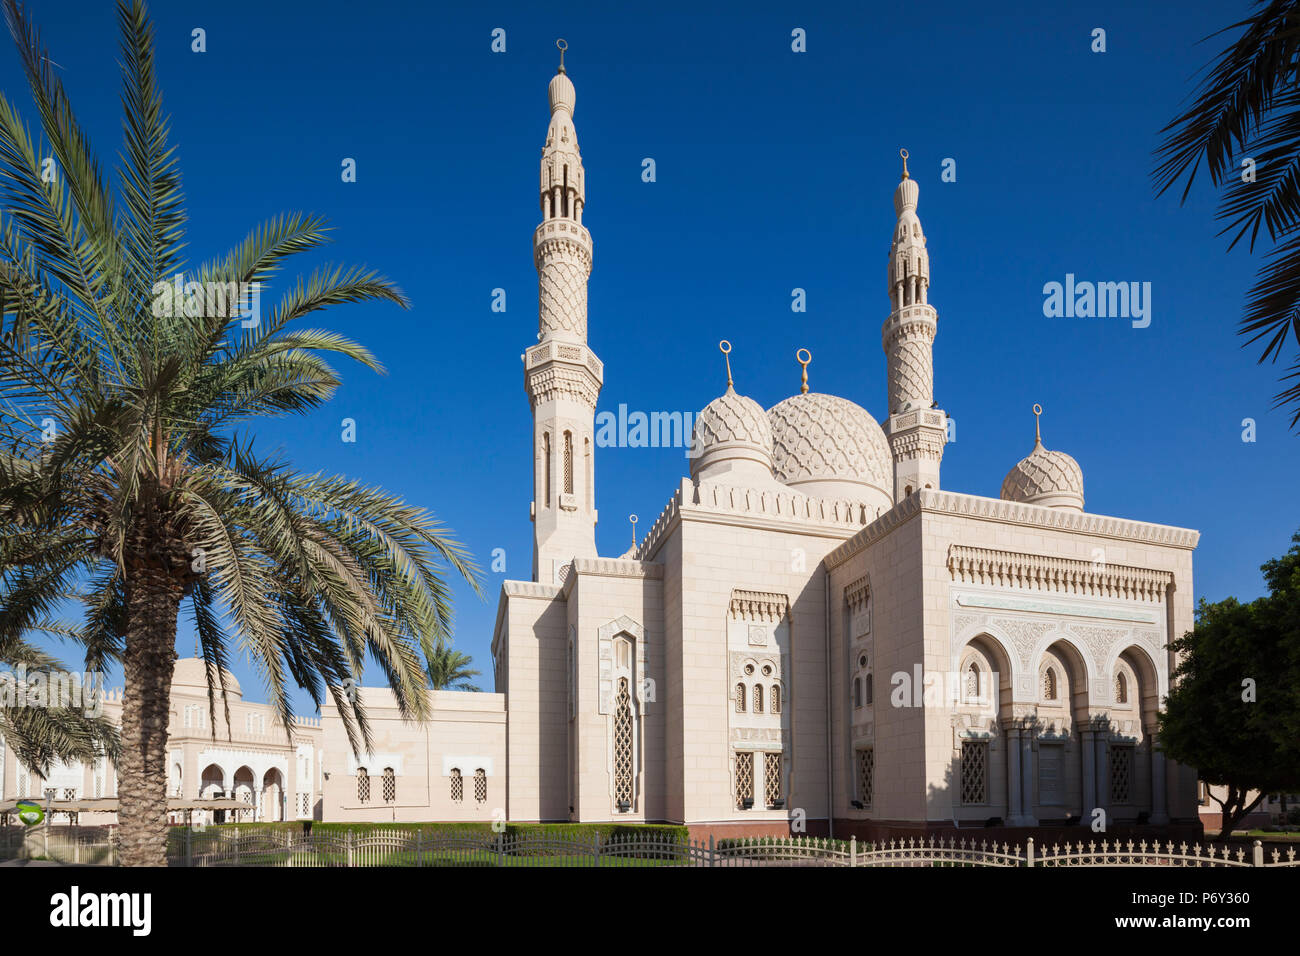 UAE, Dubai, Jumeirah, Jumeirah Mosque Stock Photo